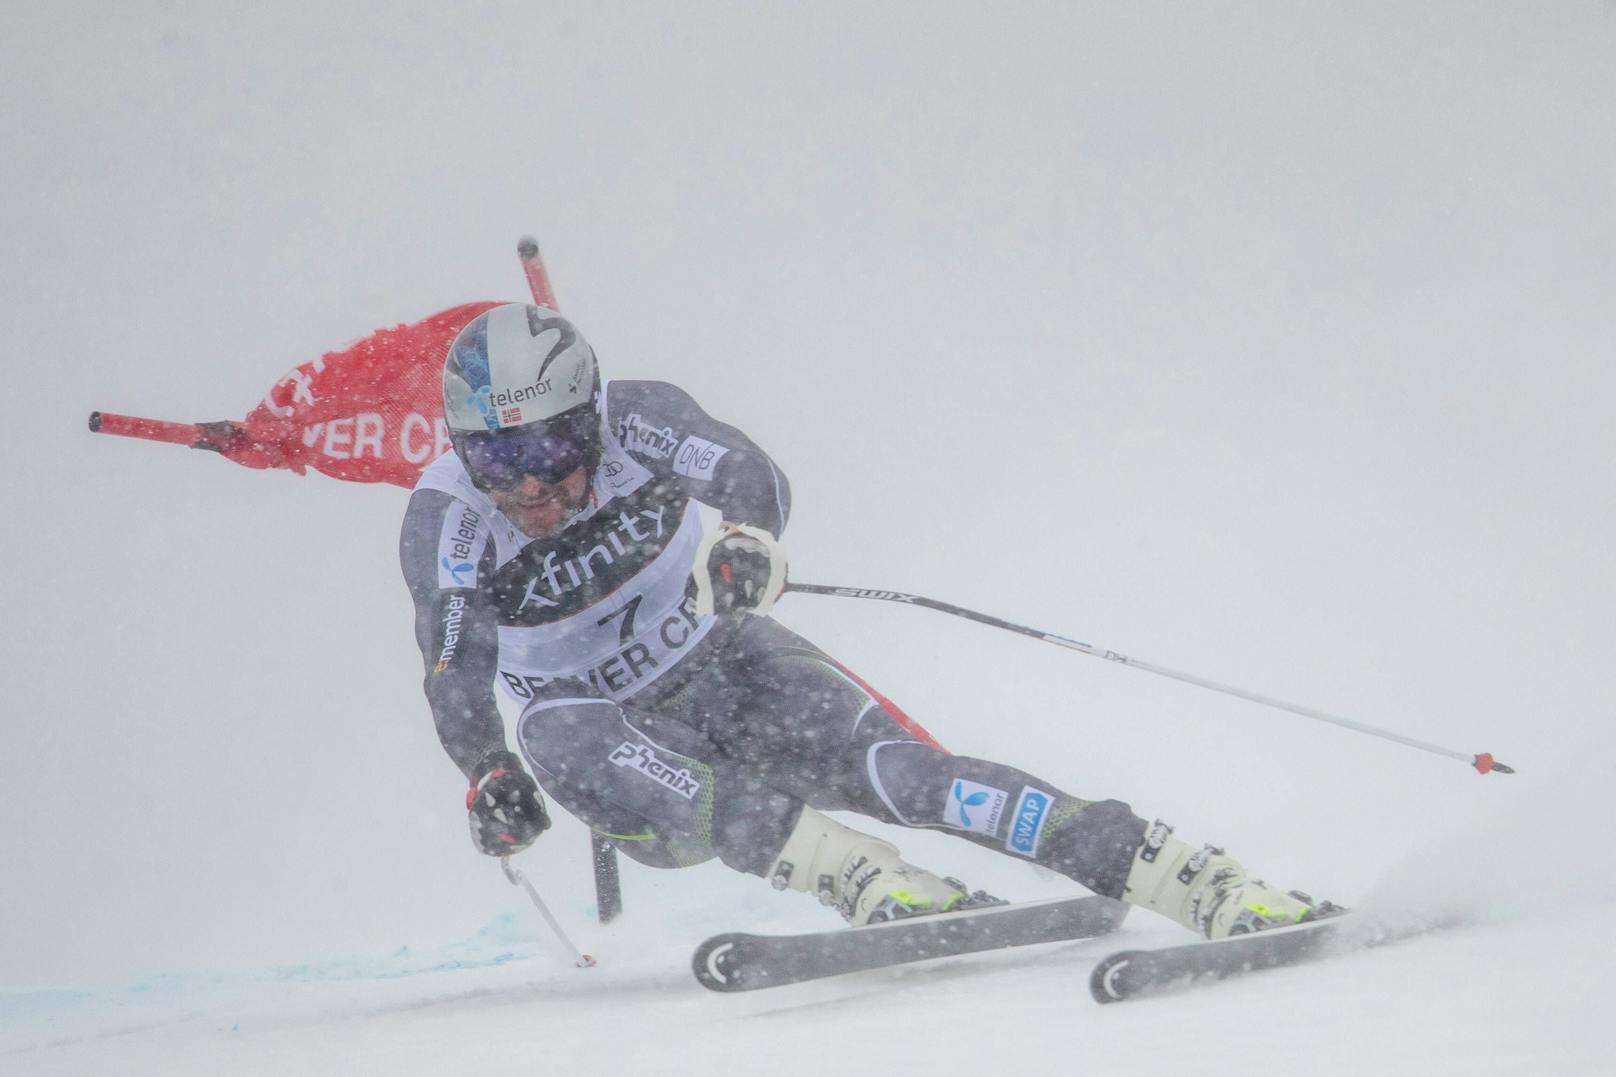 Schockdiagnose für Ski-Legende Svindal